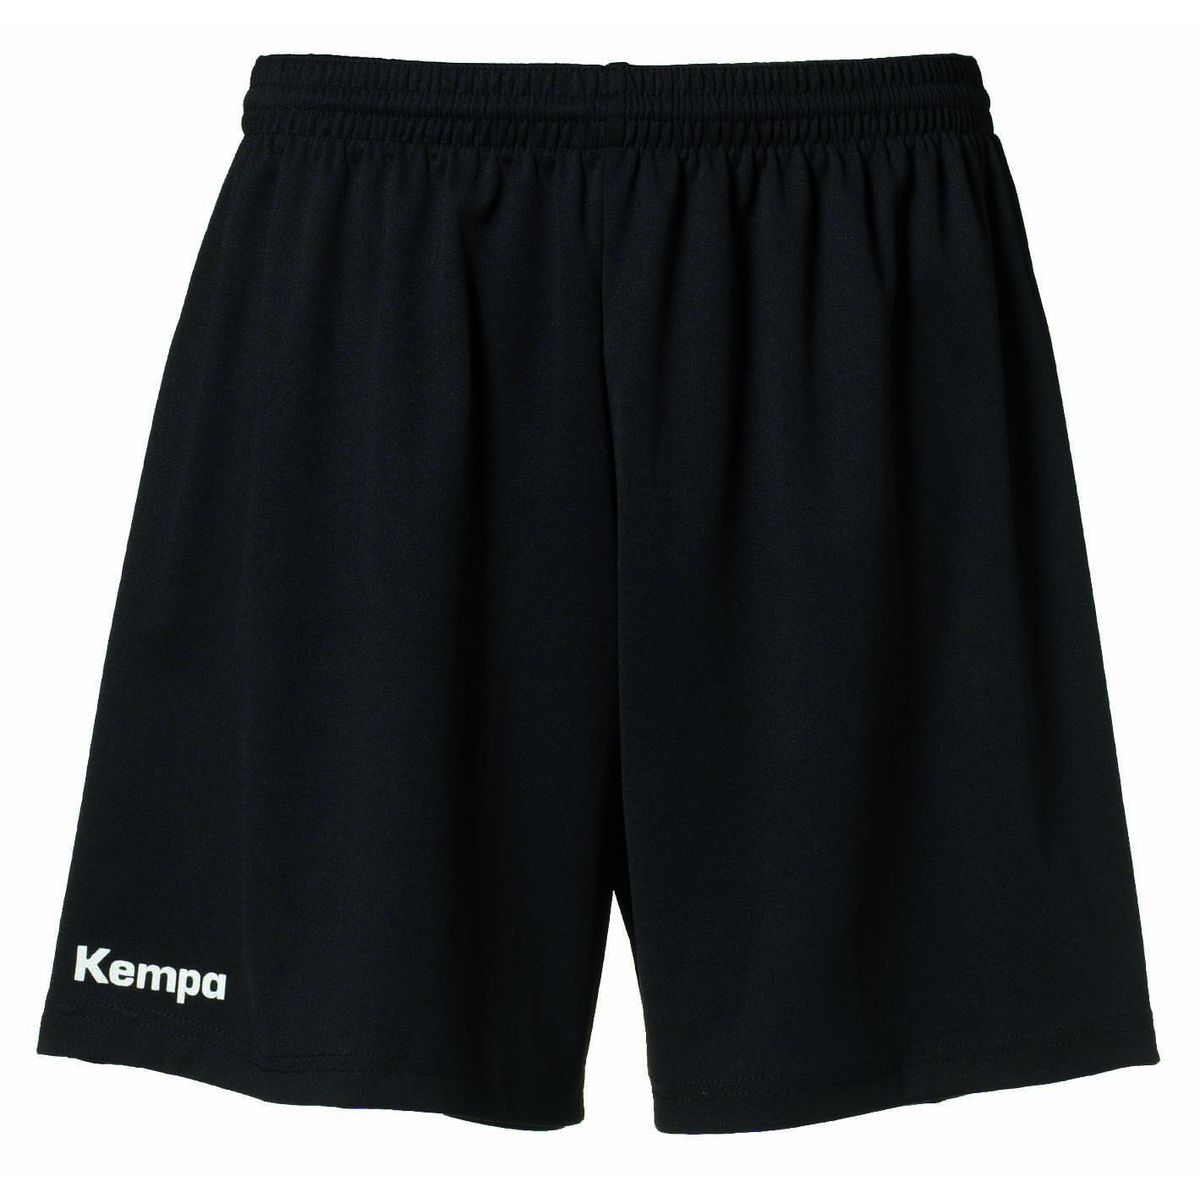 Kempa Classic Herren Teamhose